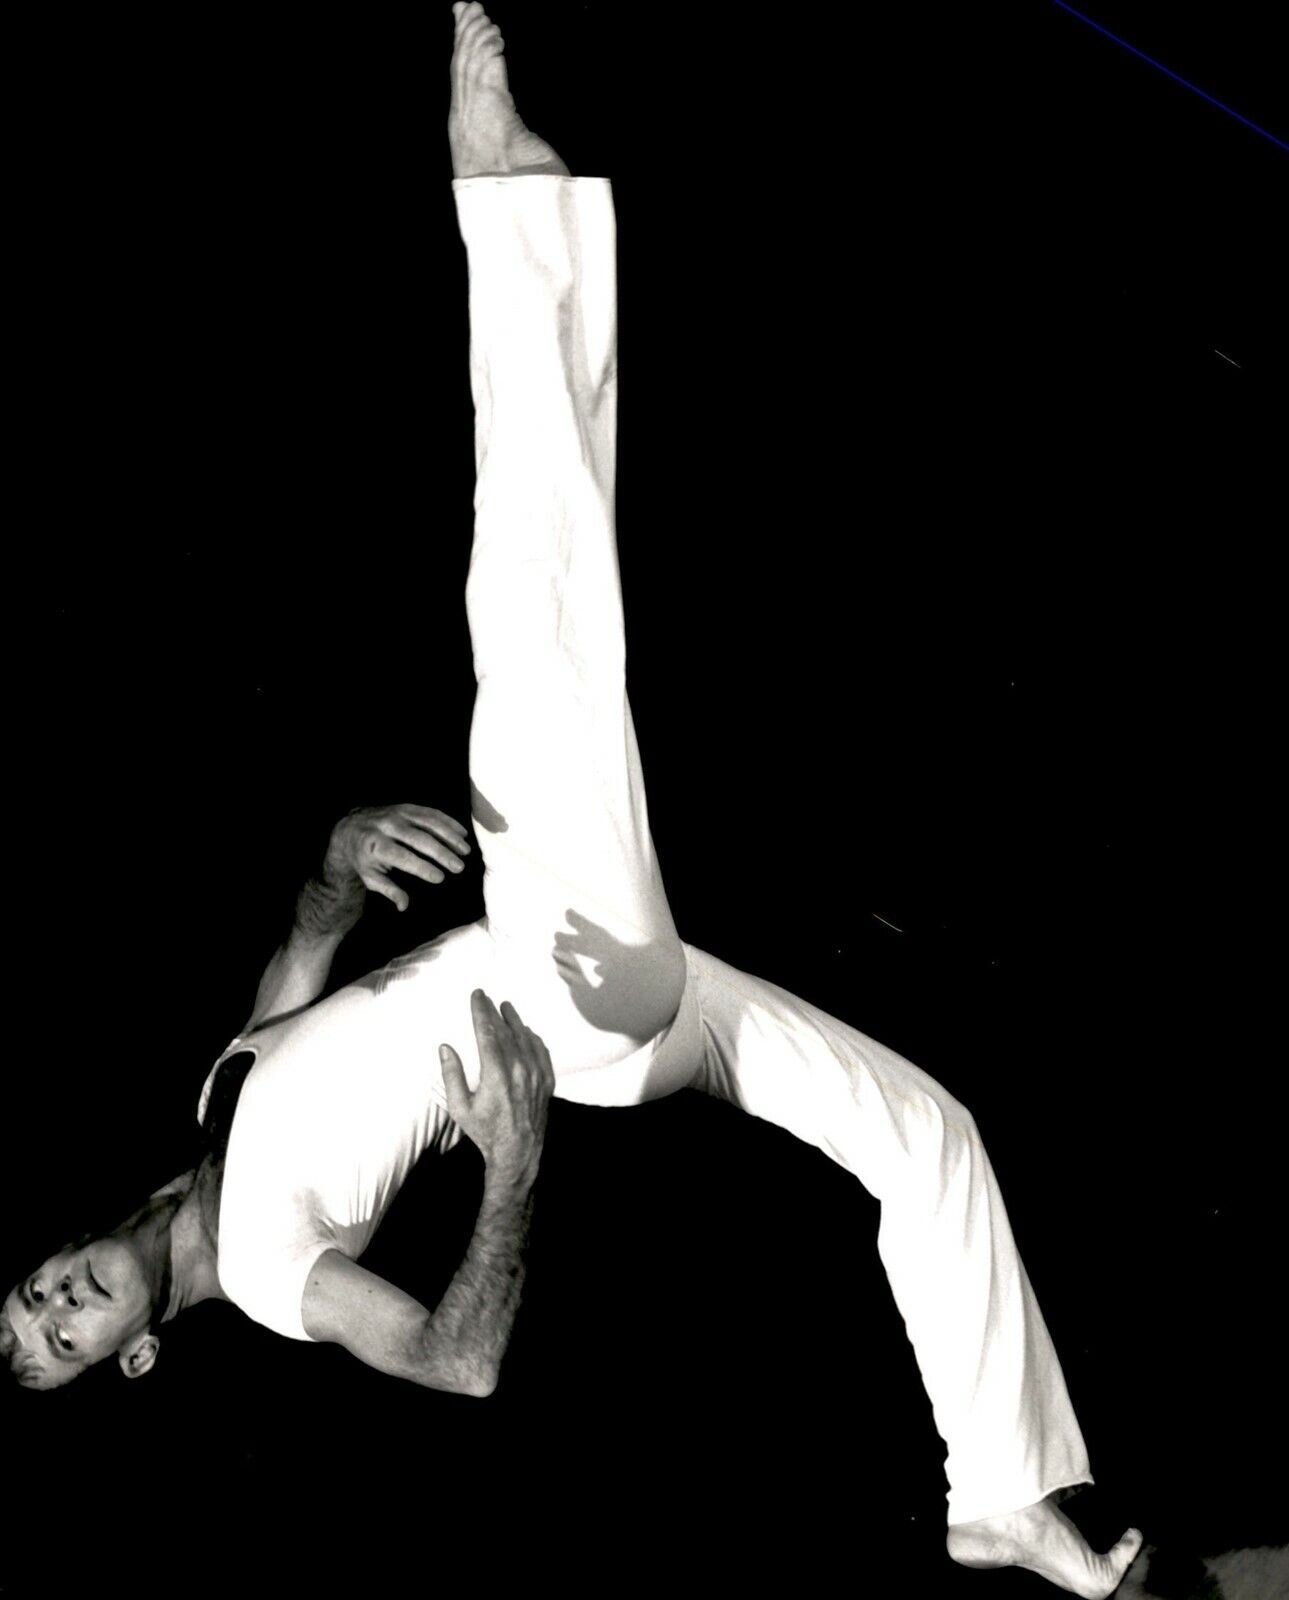 LG936 1992 Orig Bruce Berryhill Photo GREGG LIZENBERY BALLET DANCER Solo Concert